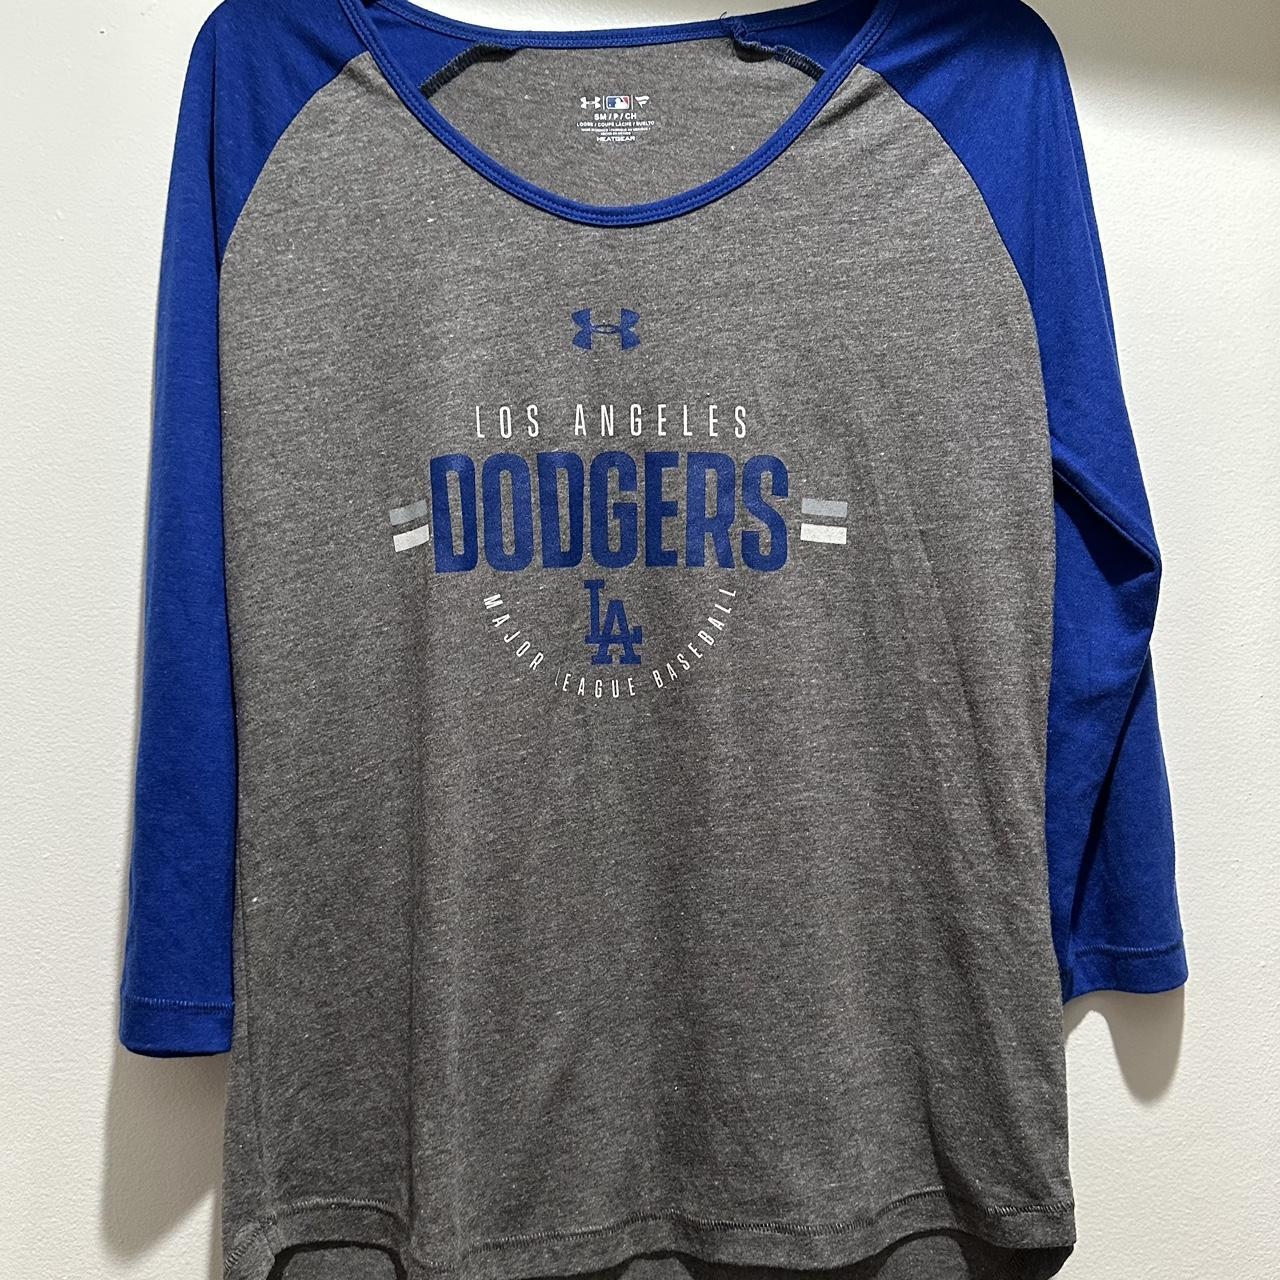 Los Angeles Dodgers Under Armour T shirt Large